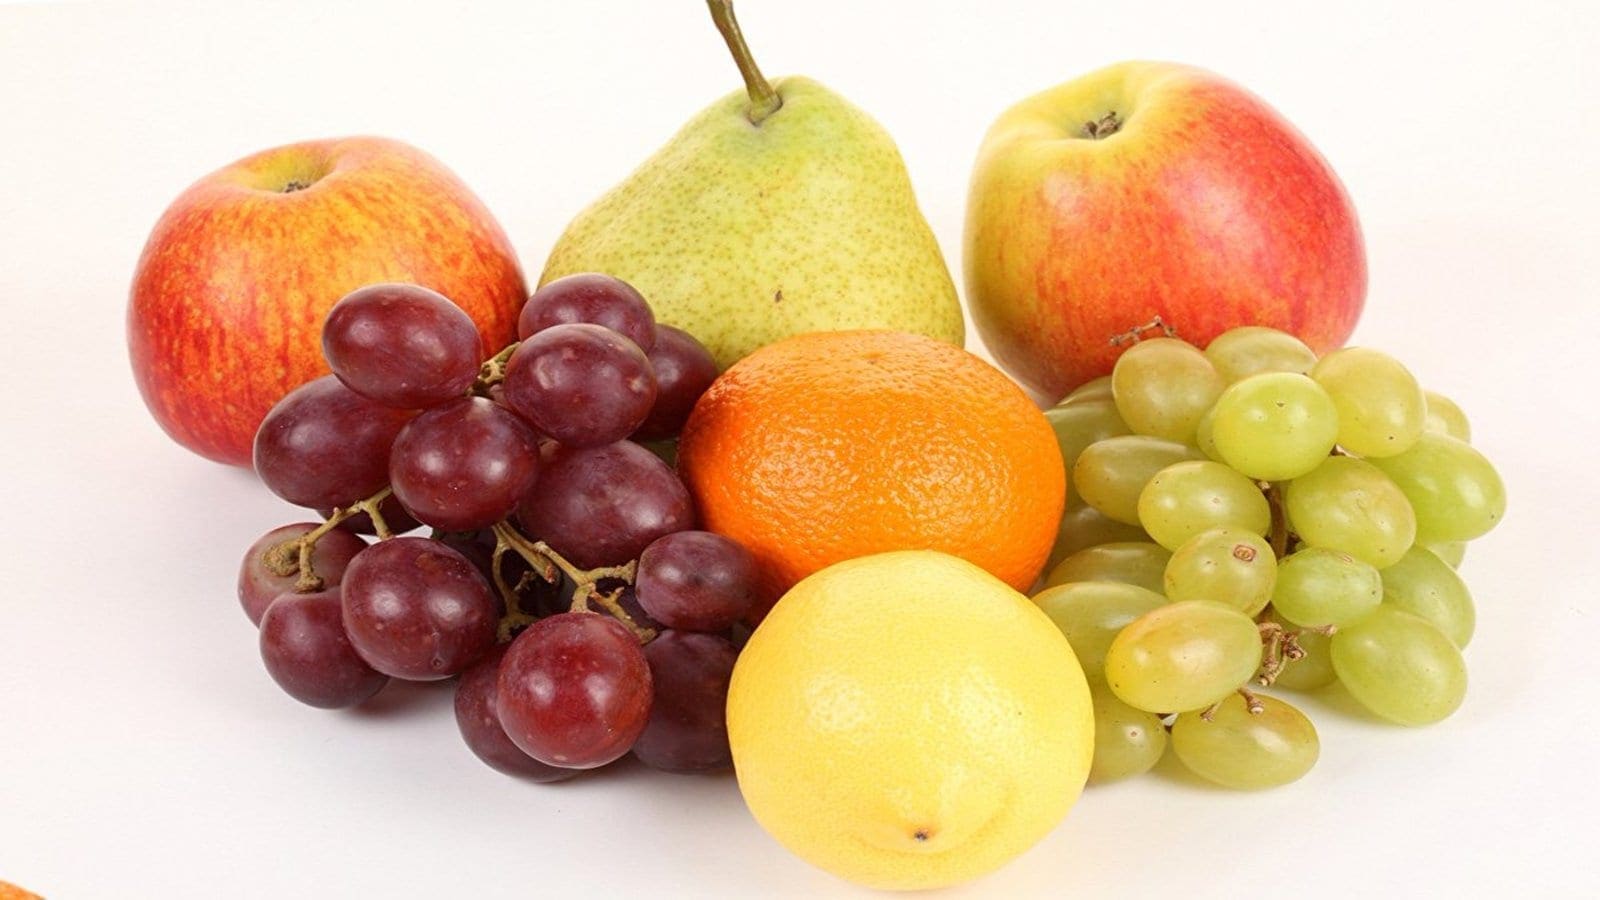 South Africa’s deciduous fruit sector taps lucrative export market following bumper harvest